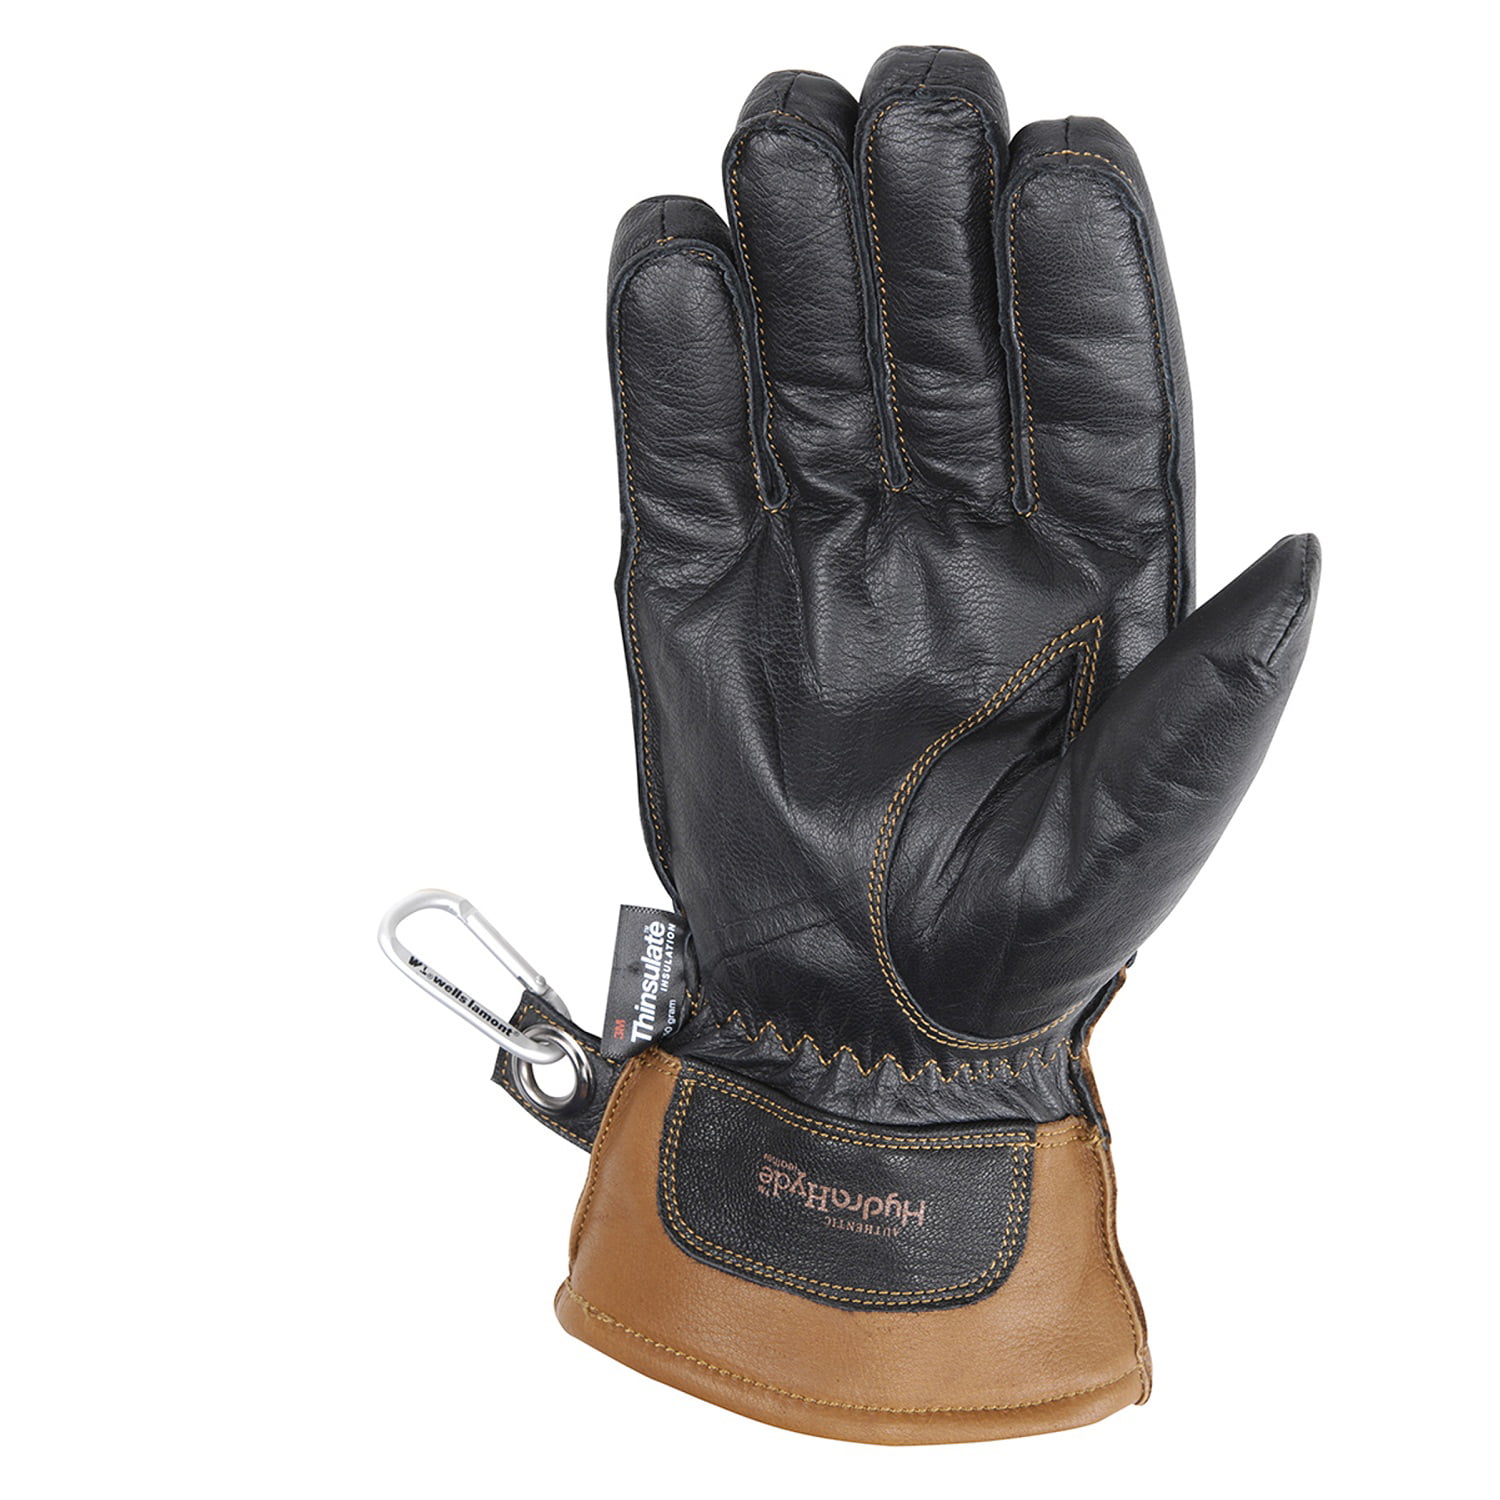 Wells Lamont 7664LK Mens Black HydraHyde Leather Winter Gloves Waterproof Insert